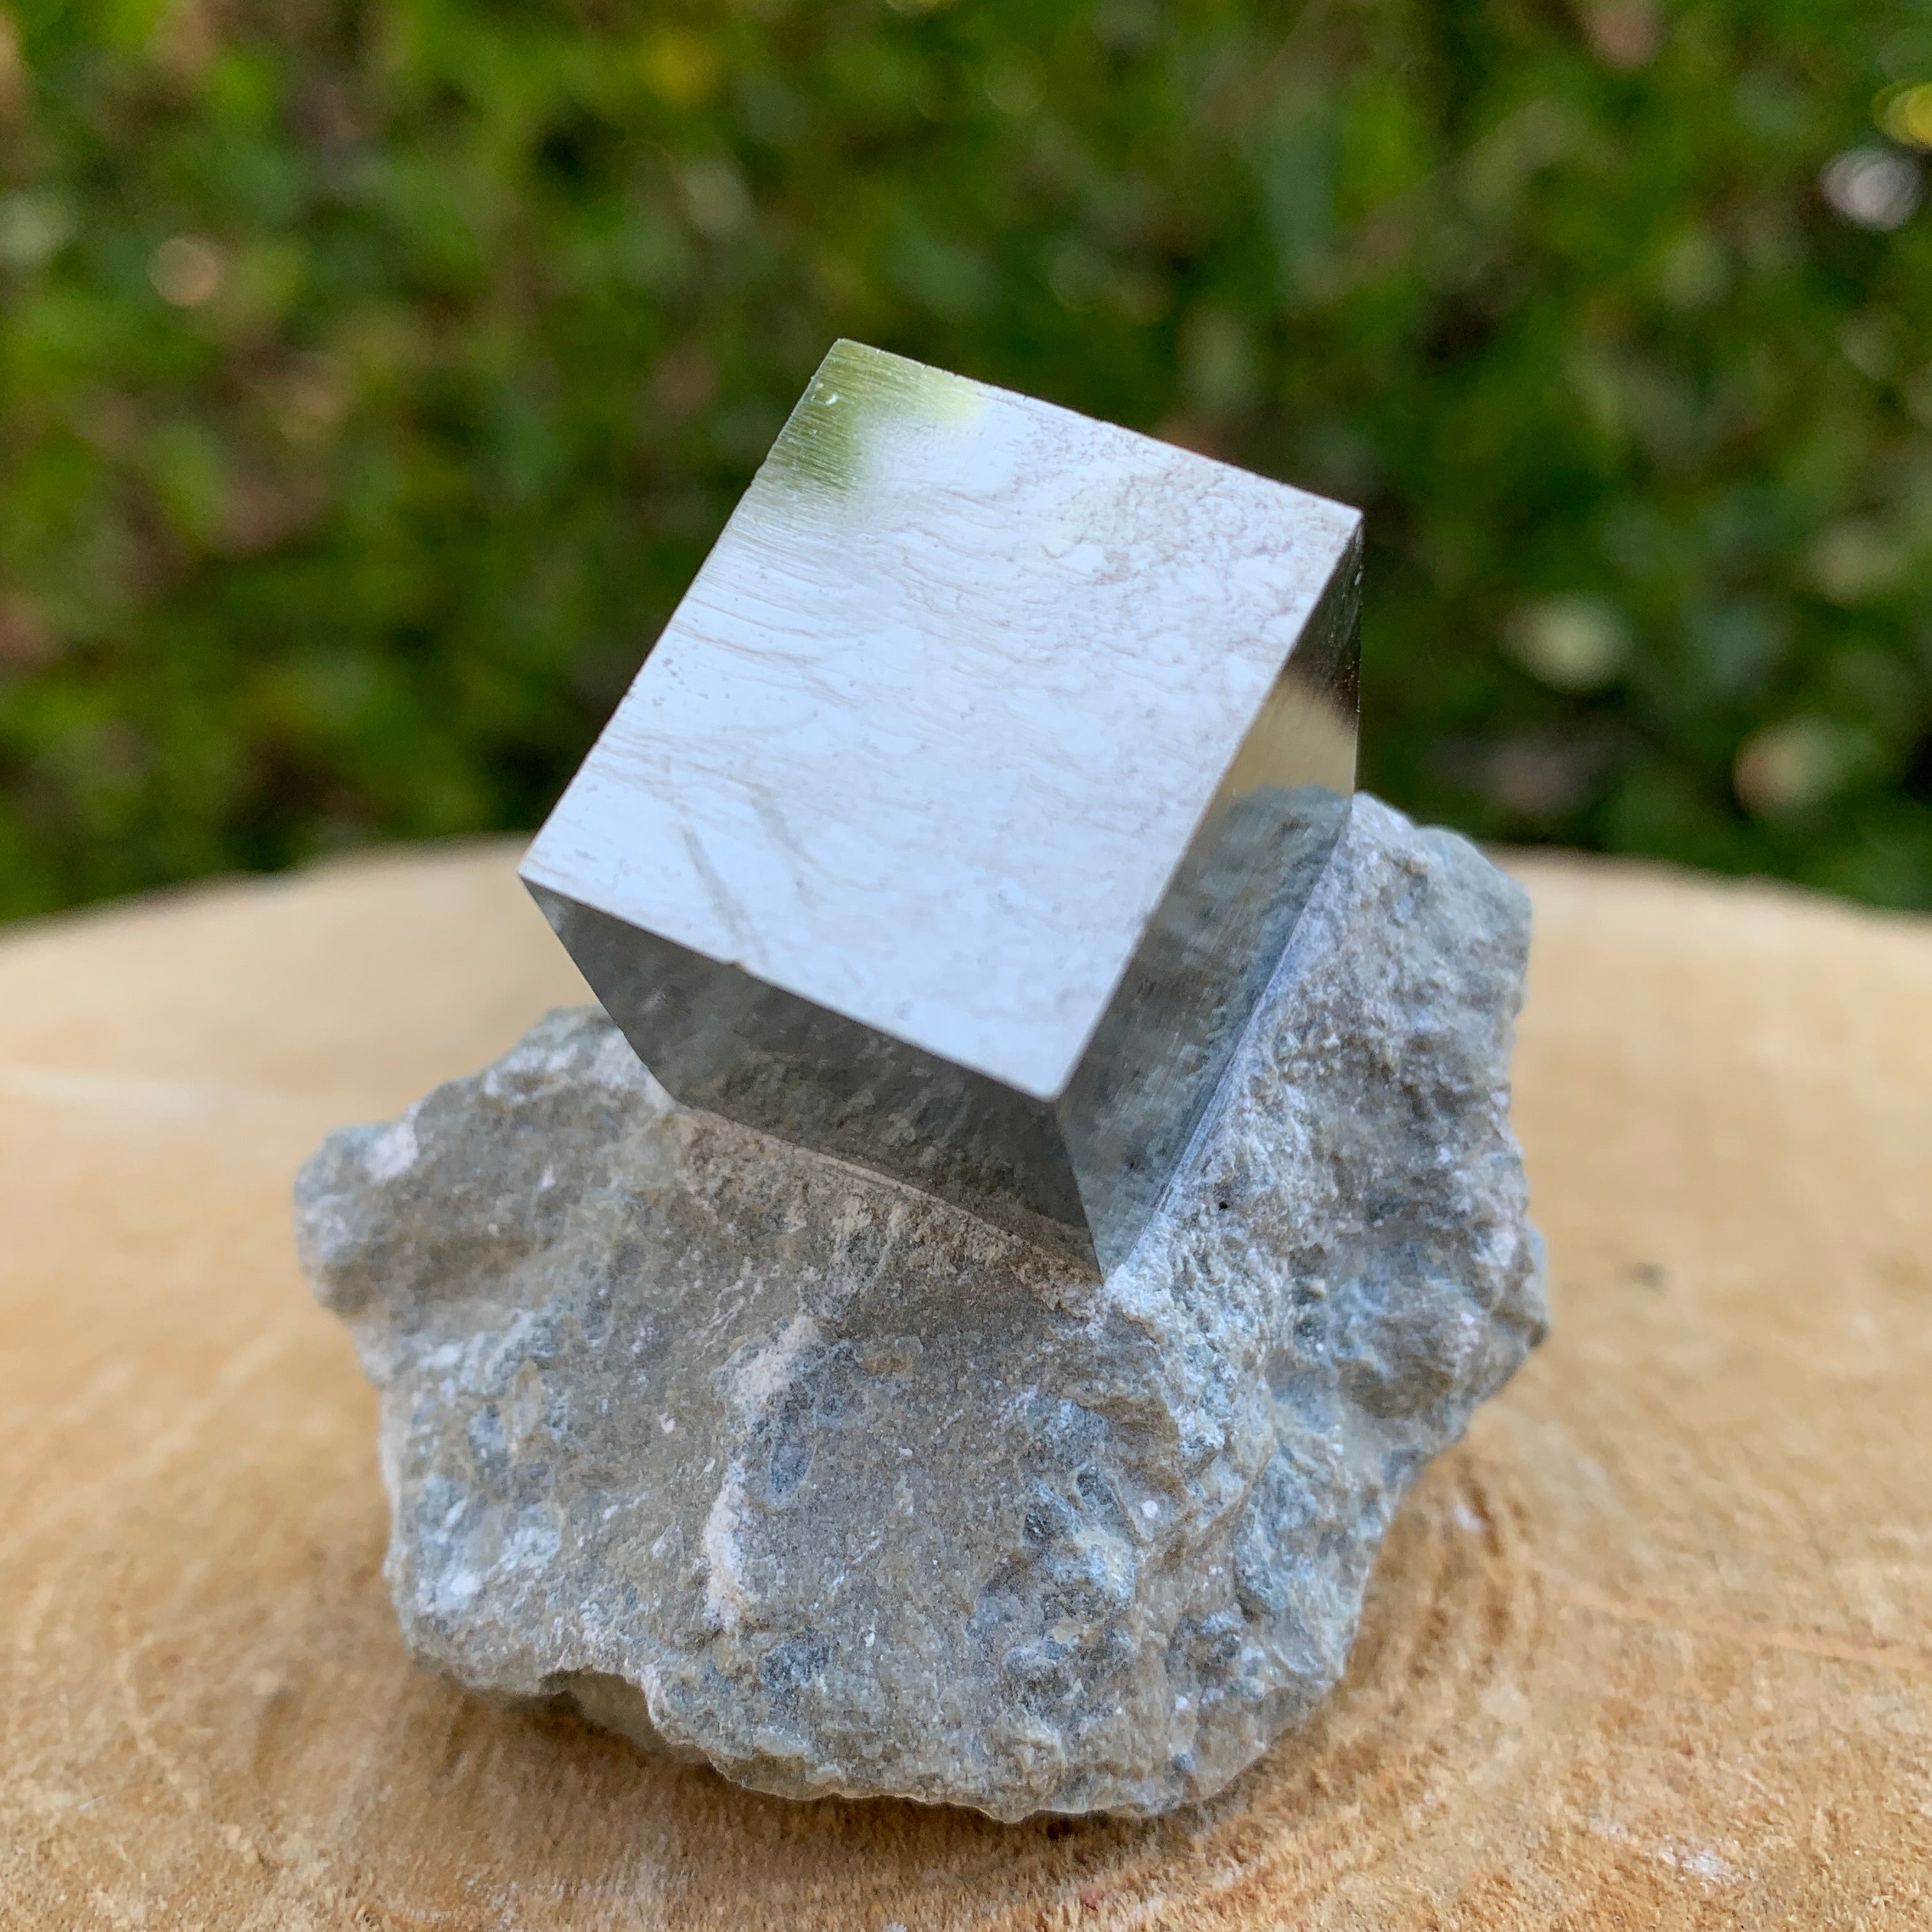 90.0g 5x5x4cm Matrix Silver Spanish Pyrite from Spain